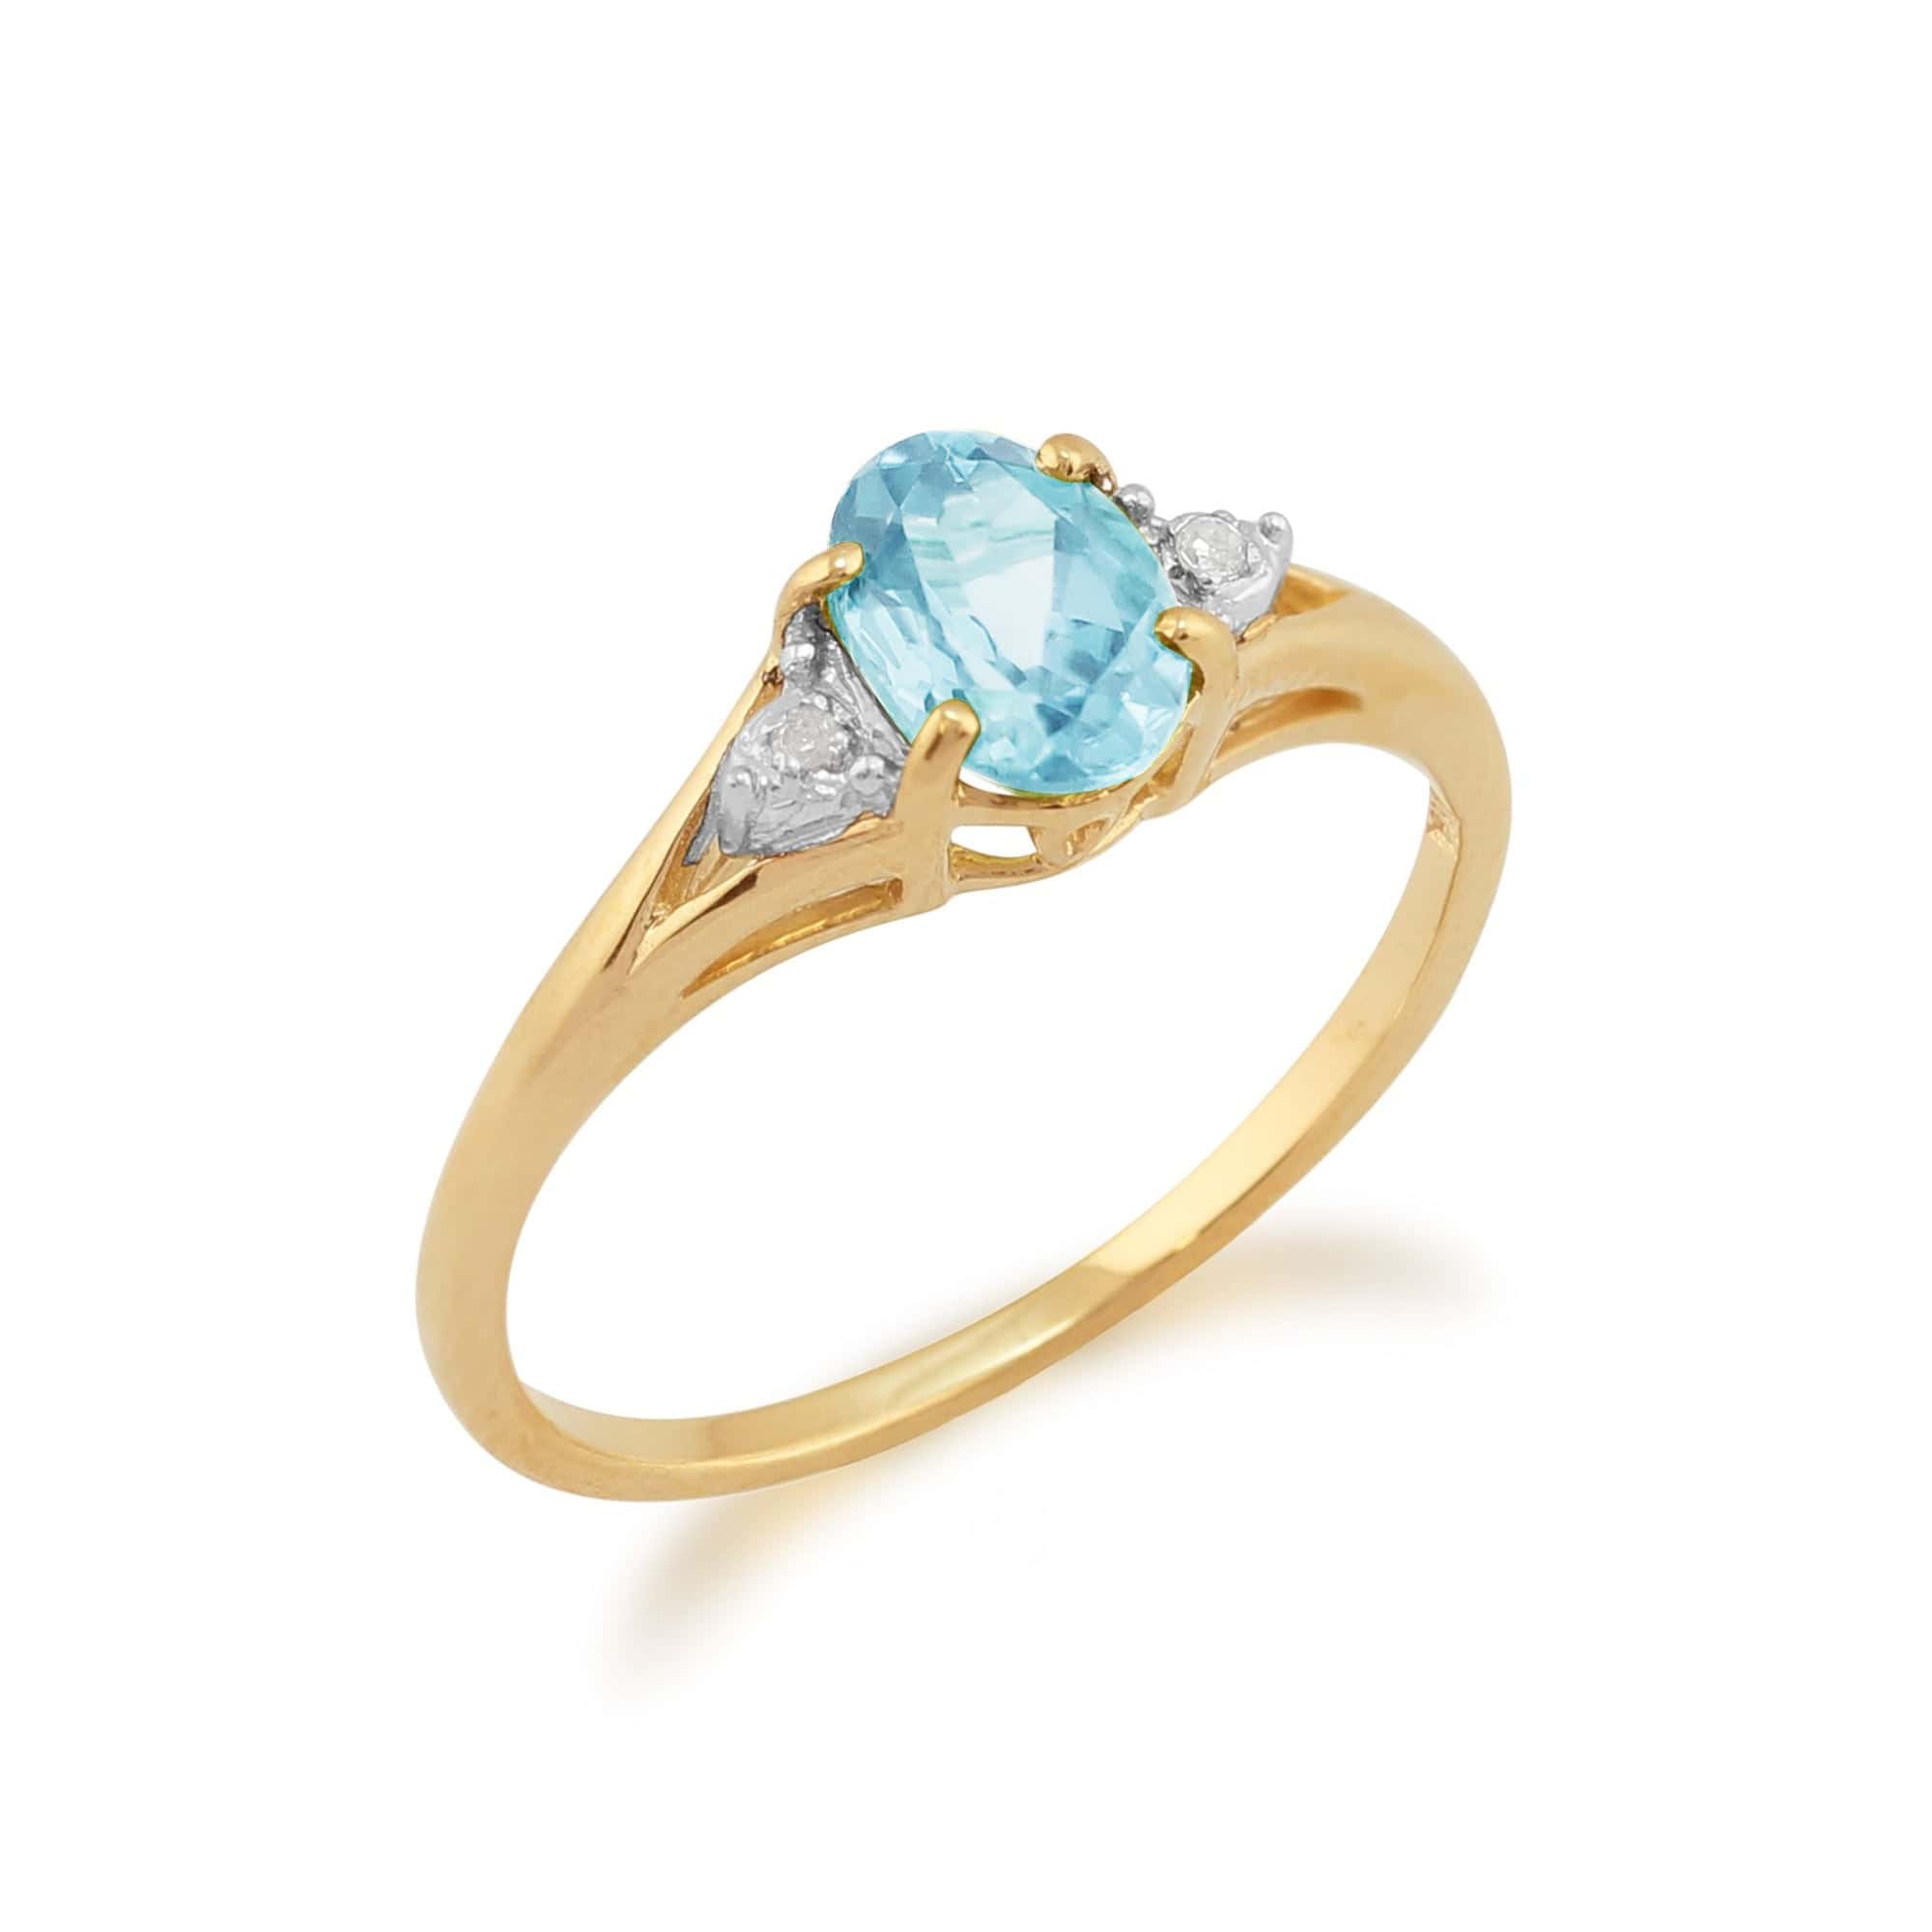 11151 Classic Blue Topaz & Diamond Ring in 9ct Yellow Gold 2